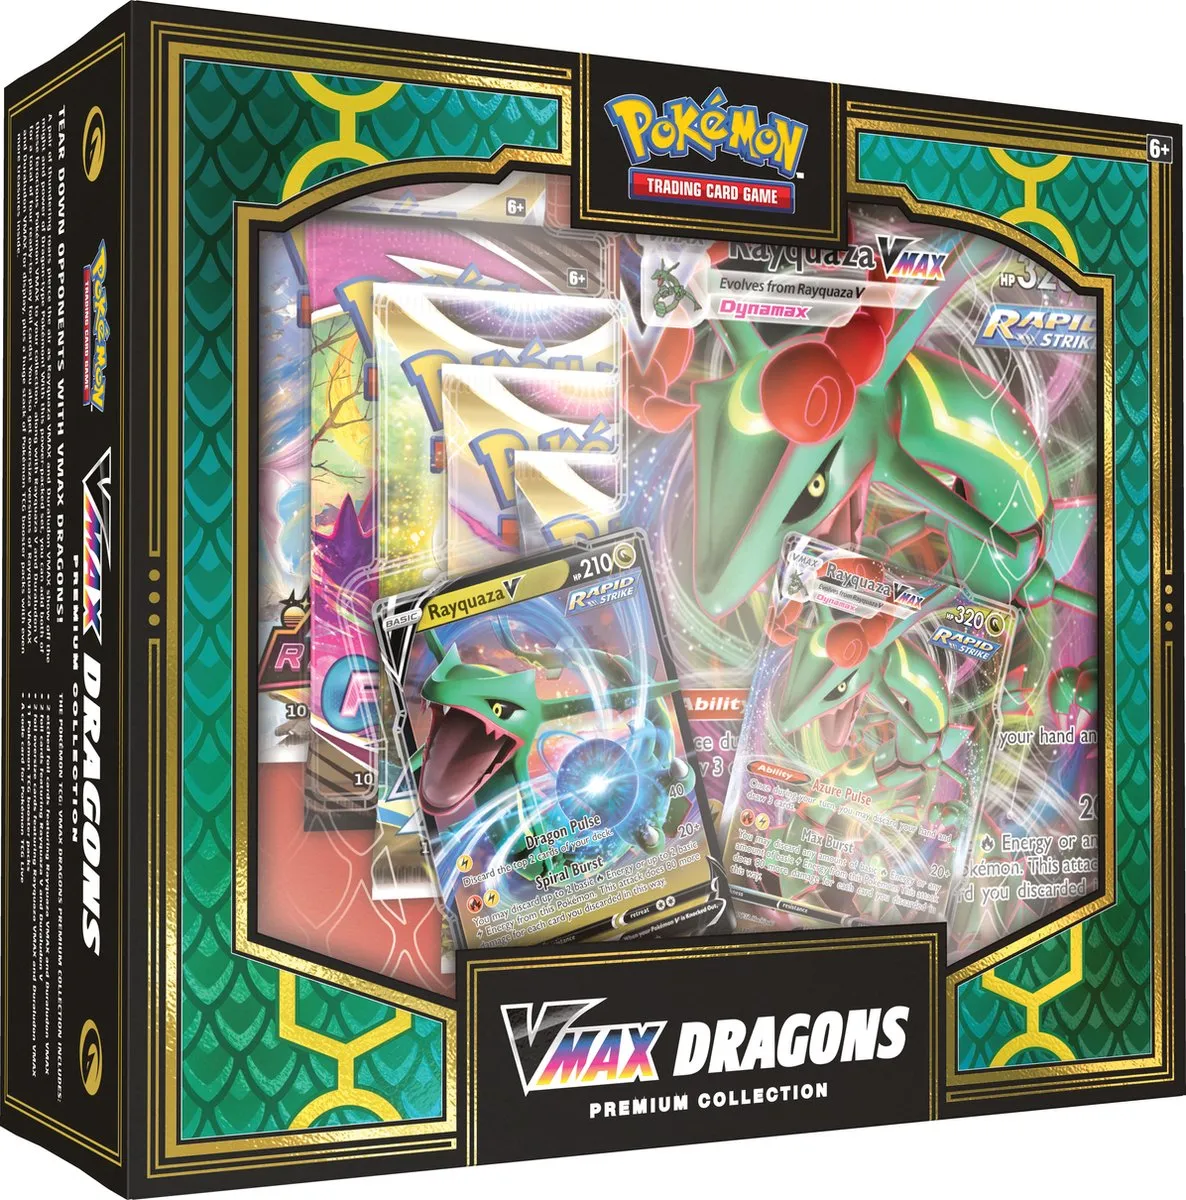 Pokémon Premium Collection VMAX Dragons - Pokémon Kaarten speelgoed